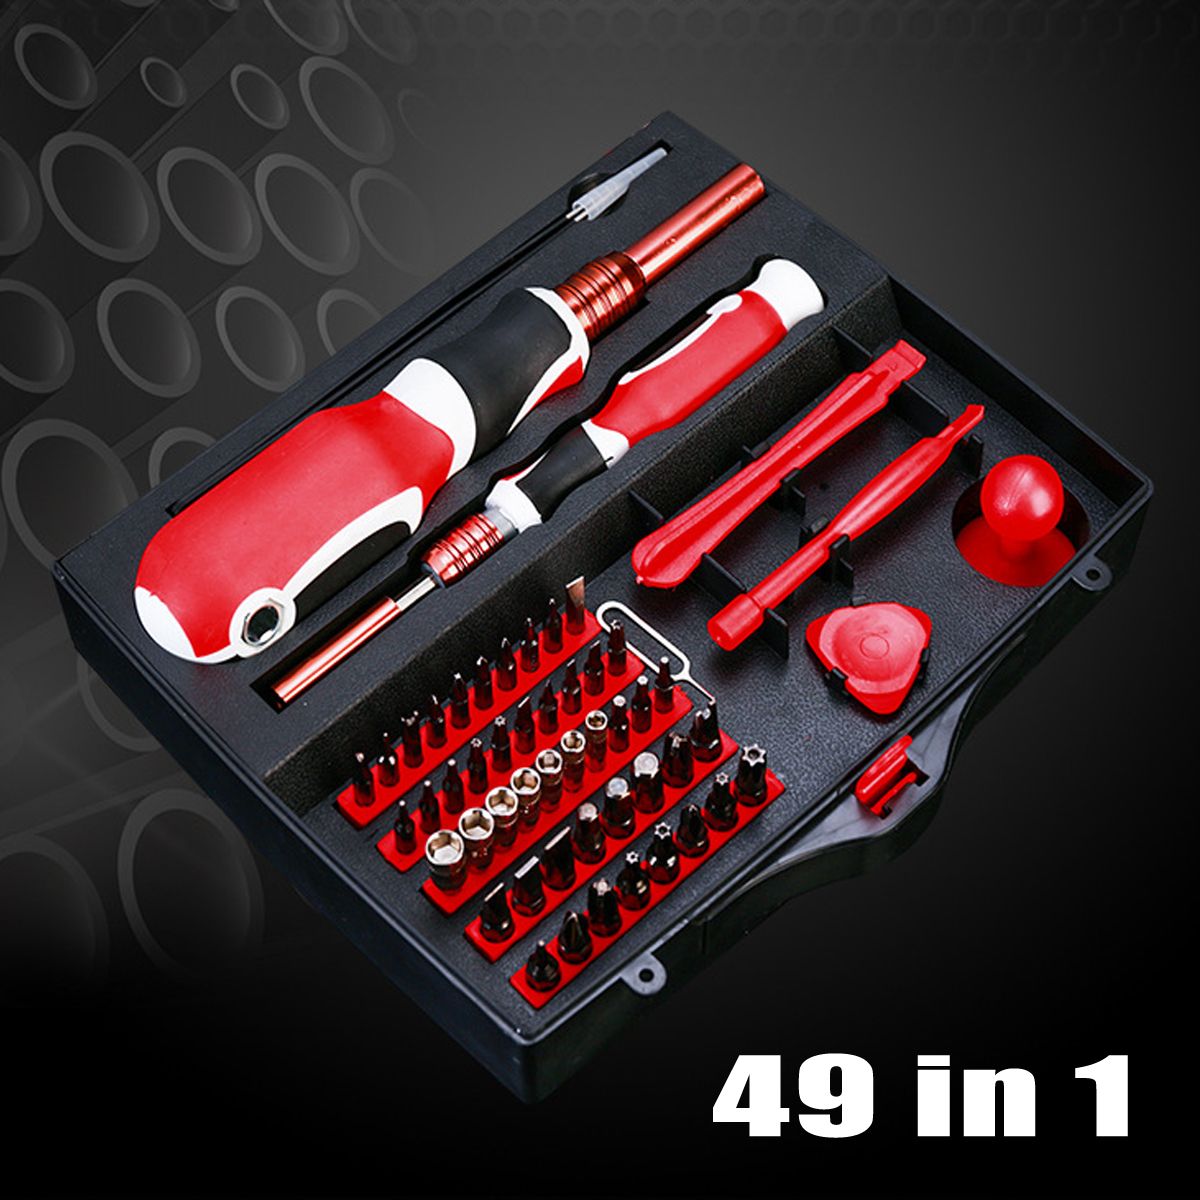 Multi-purpose-Insulation-Screwdrivers-Repairing-Tools-Kit-Ergonomic-Handle-1286261